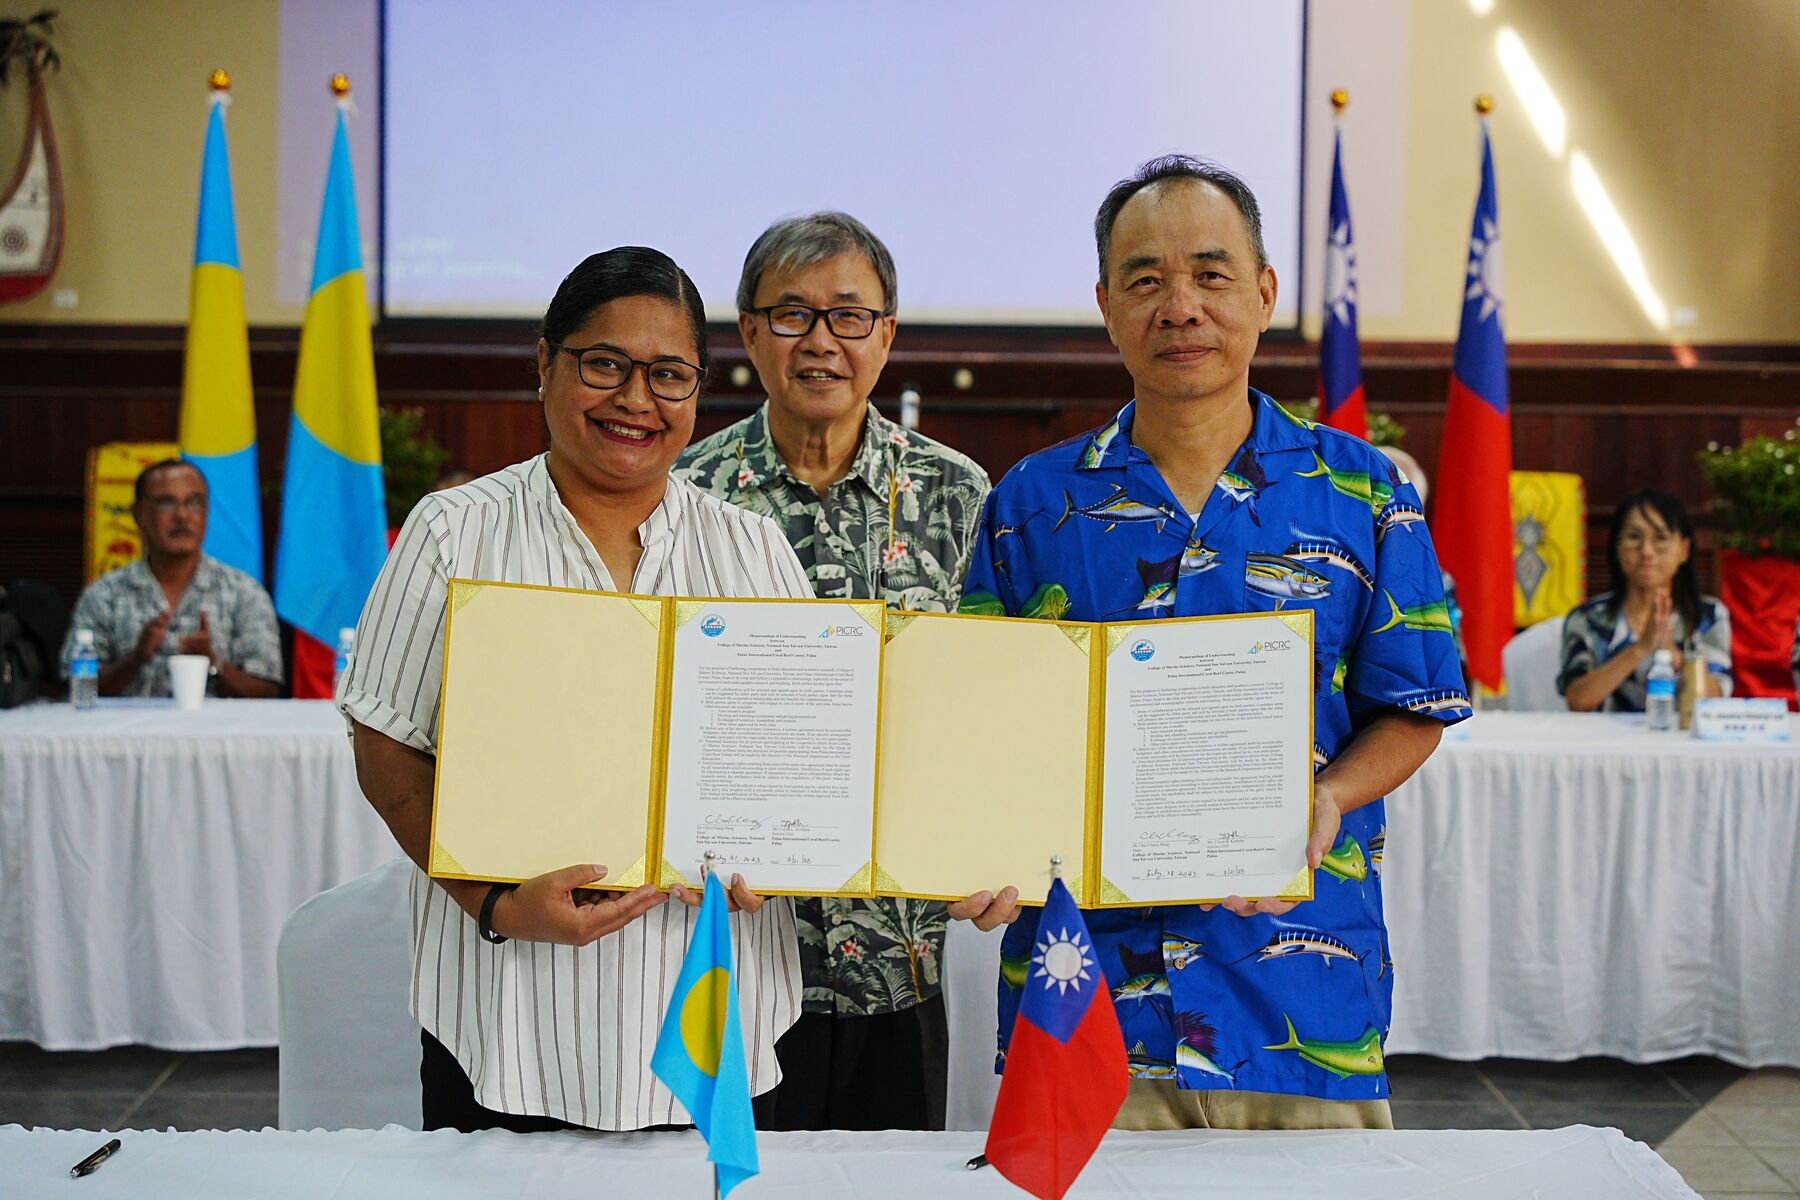 NSYSU Collage of Marine Sciences, Dean Chin-Chang Hung signed the MOU with Interim C.E.O. Caryn Lkong Koshiba of Palau International Coral Reef Center at the Palau and Taiwan Blue Ocean Seminar